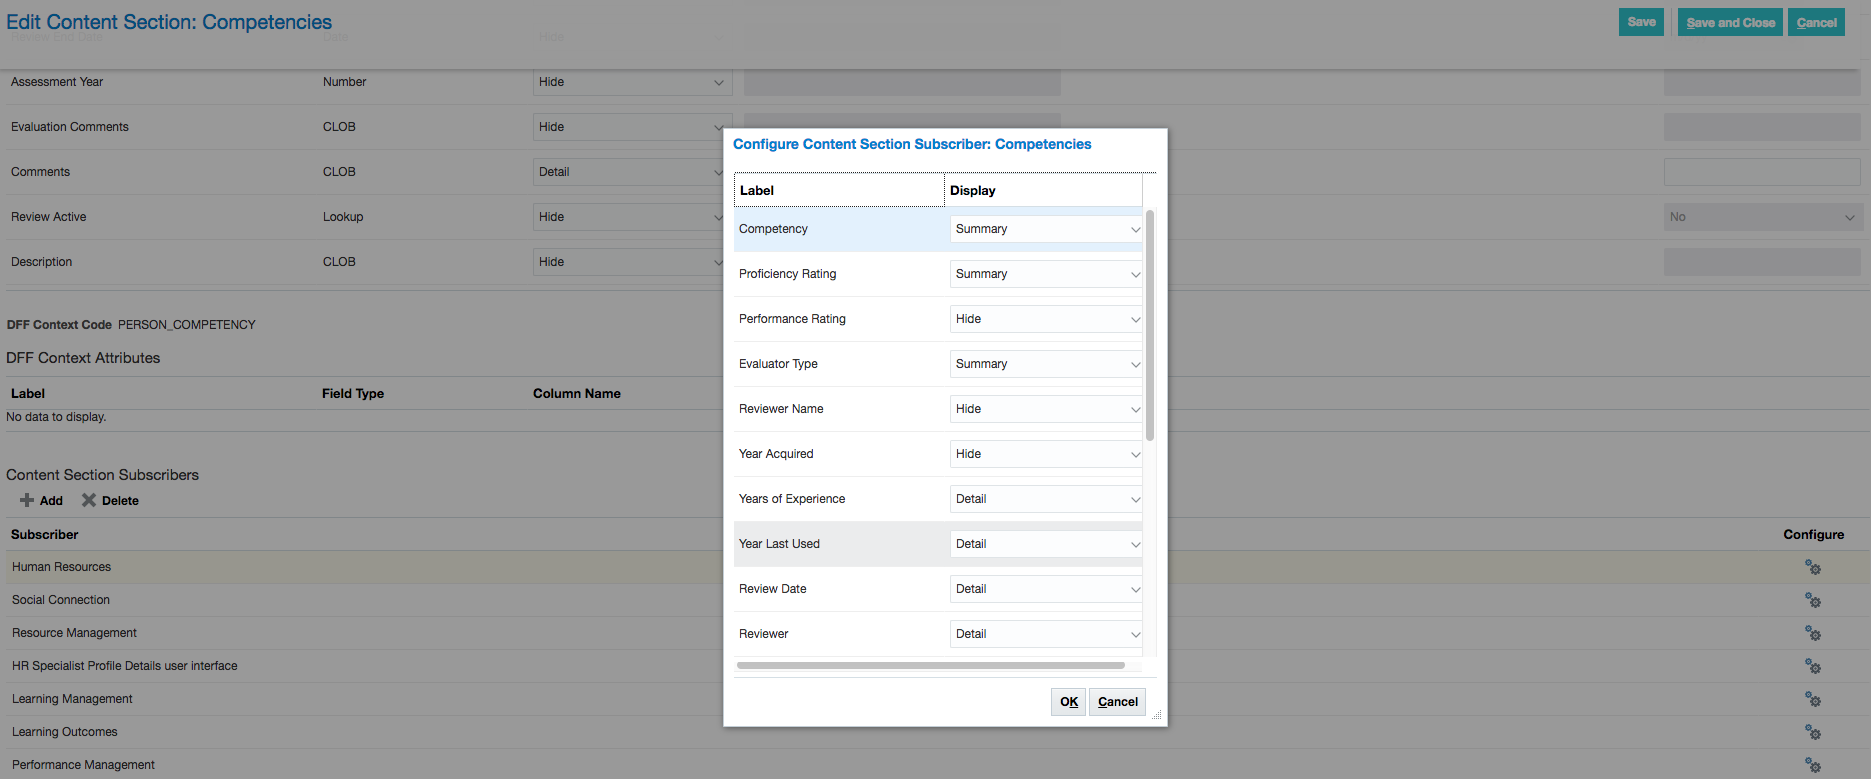 Configure Content Section Subscriber: Competencies